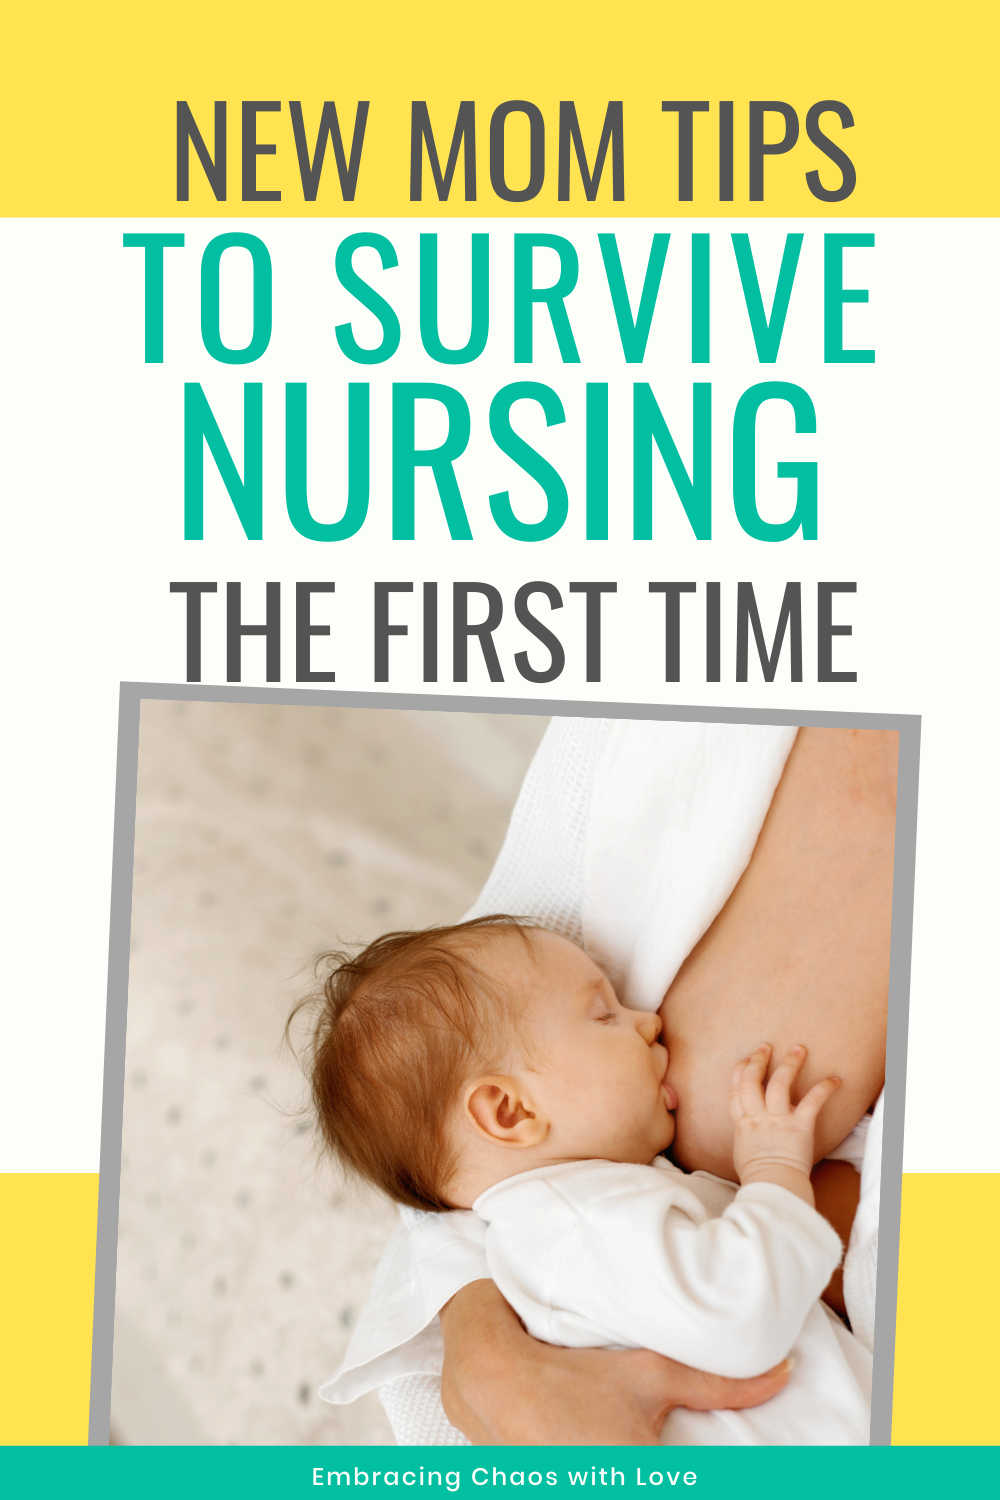 14 Breastfeeding Tips for New Moms